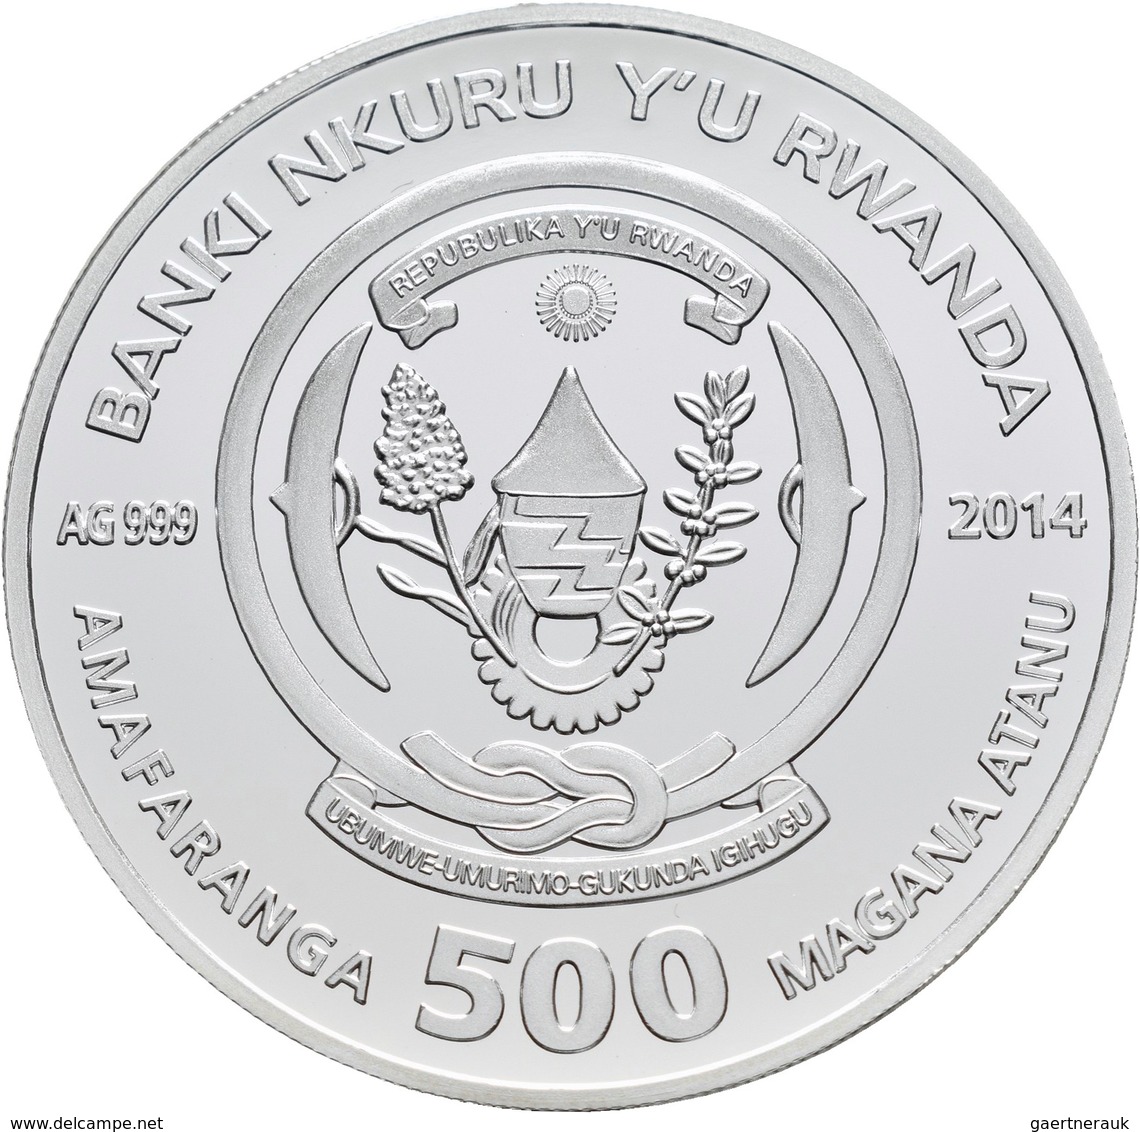 Ruanda: Set 3 X 500 Francs FRW 2014: Jahr Des Pferdes (Year Of The Horse). 3 X 25 G Silbermünzen, Ve - Rwanda